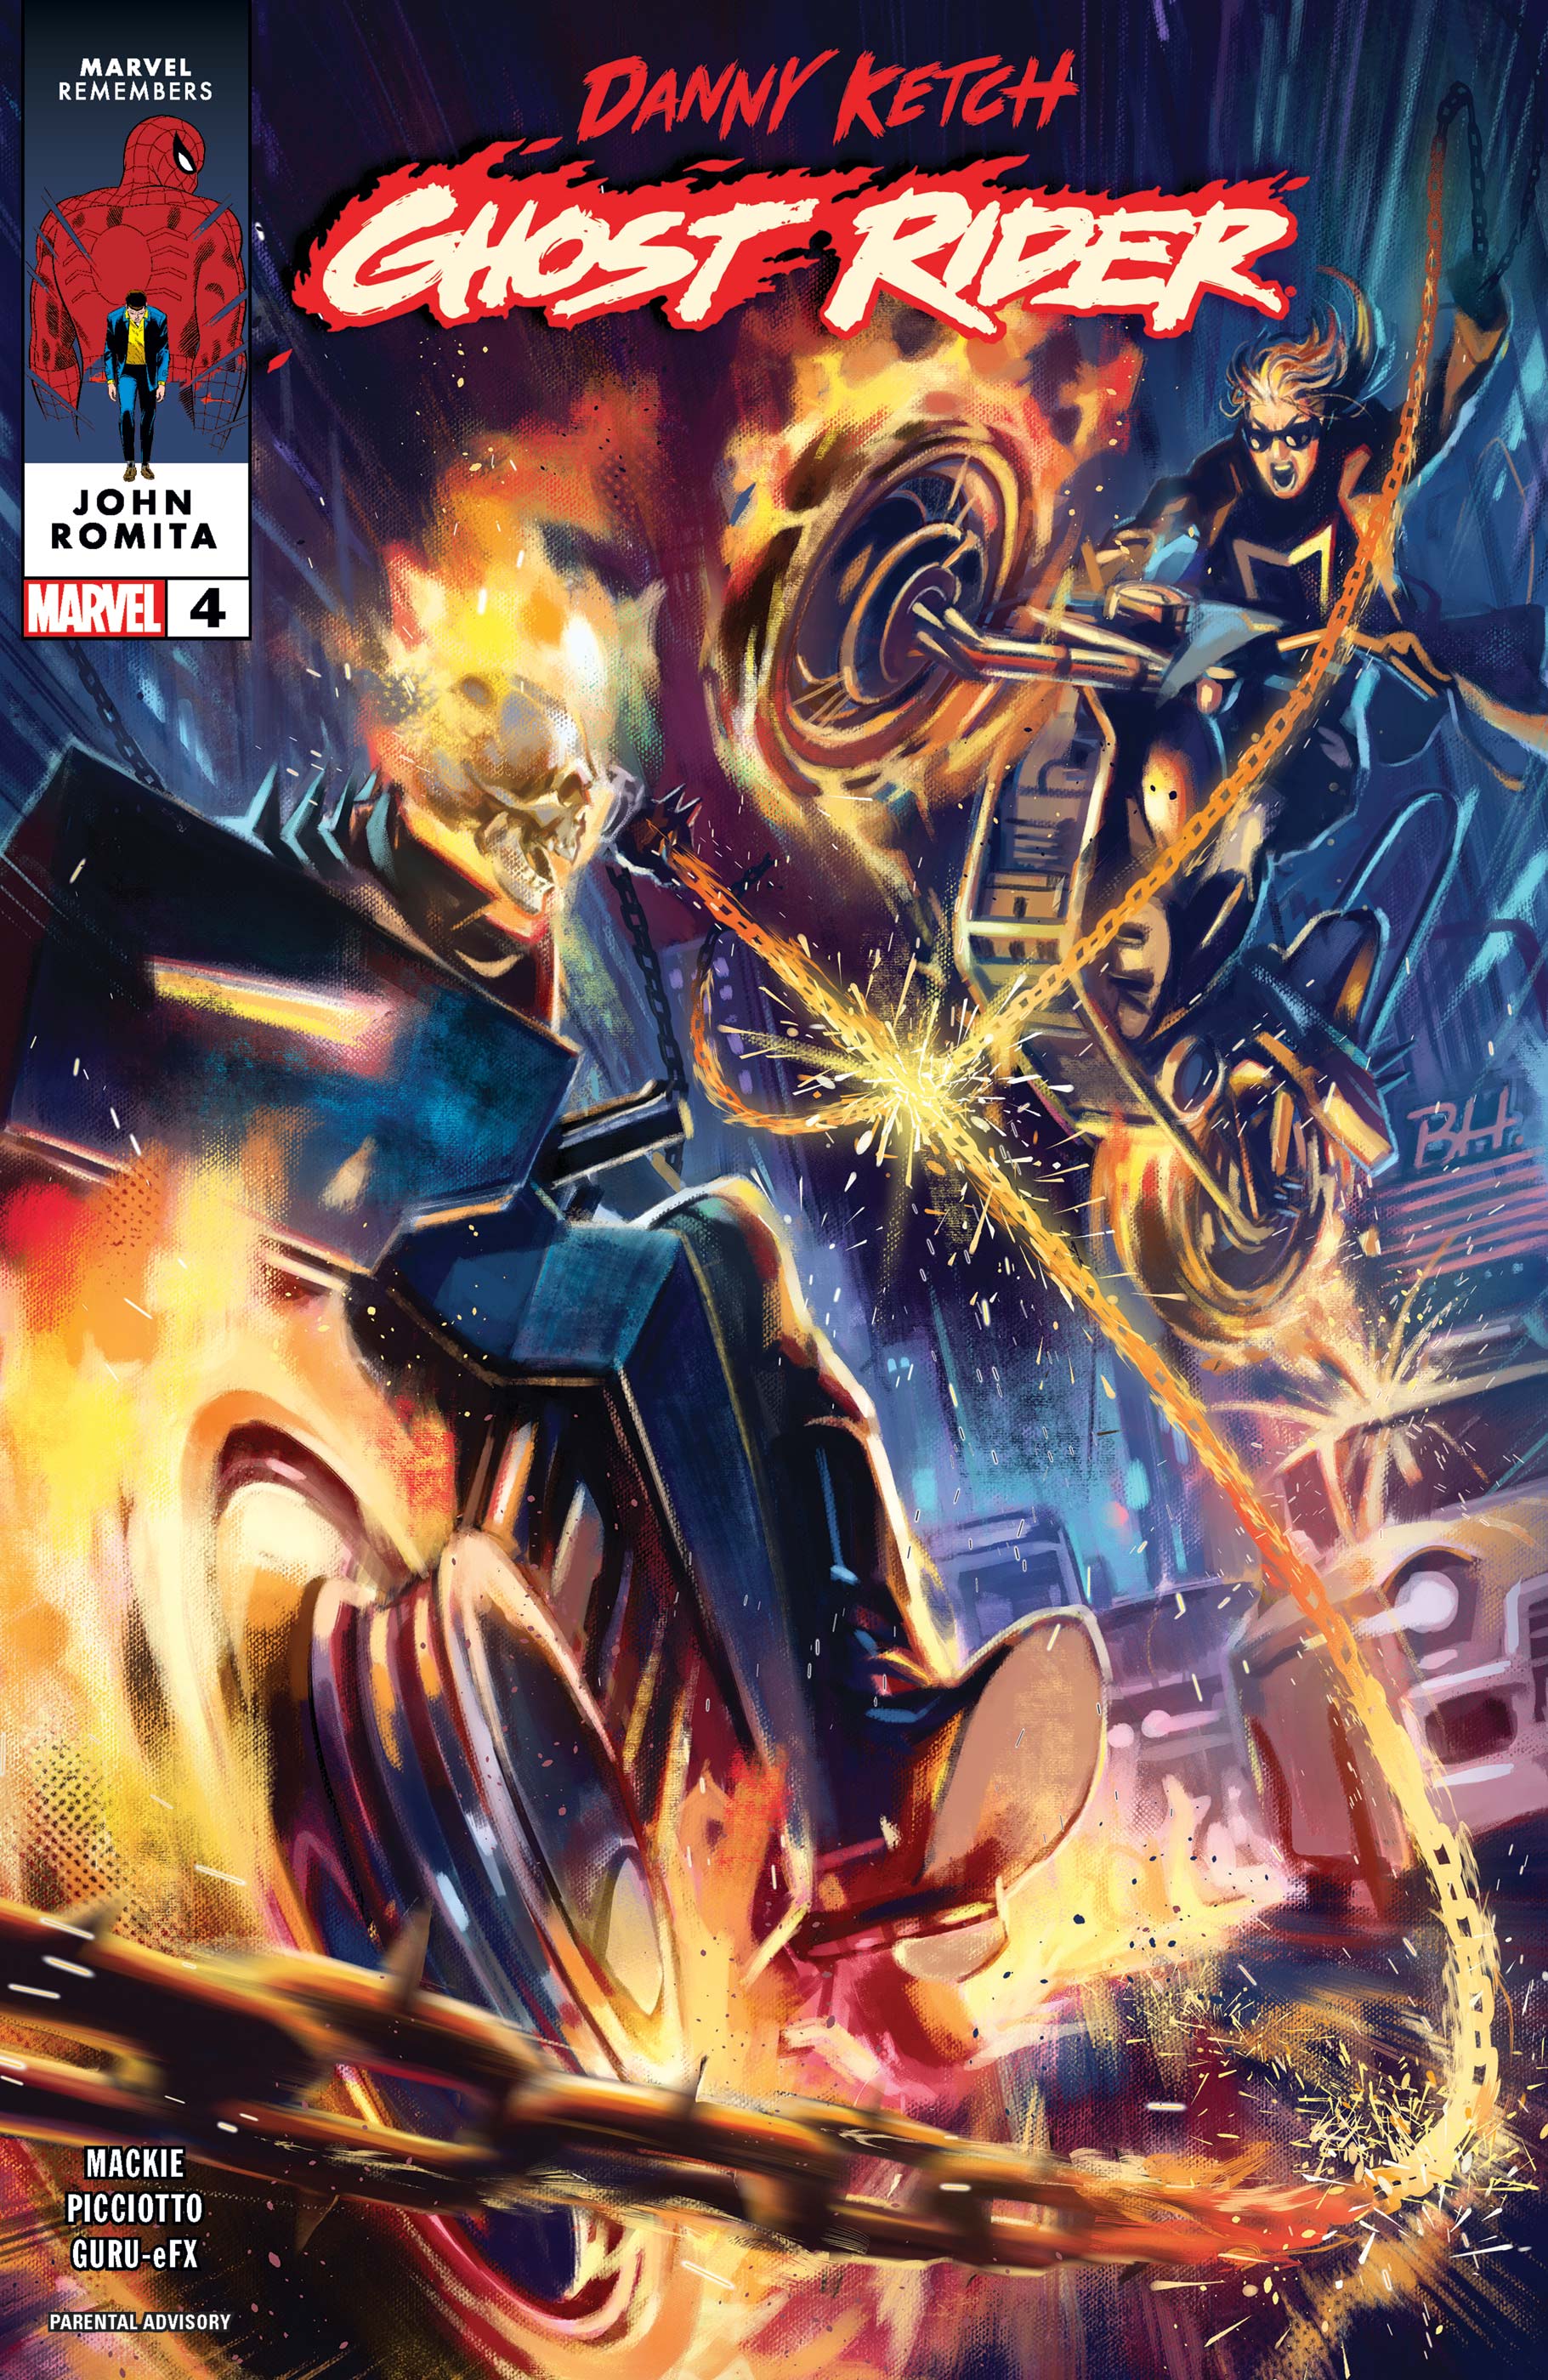 Danny Ketch: Ghost Rider (2023) #4